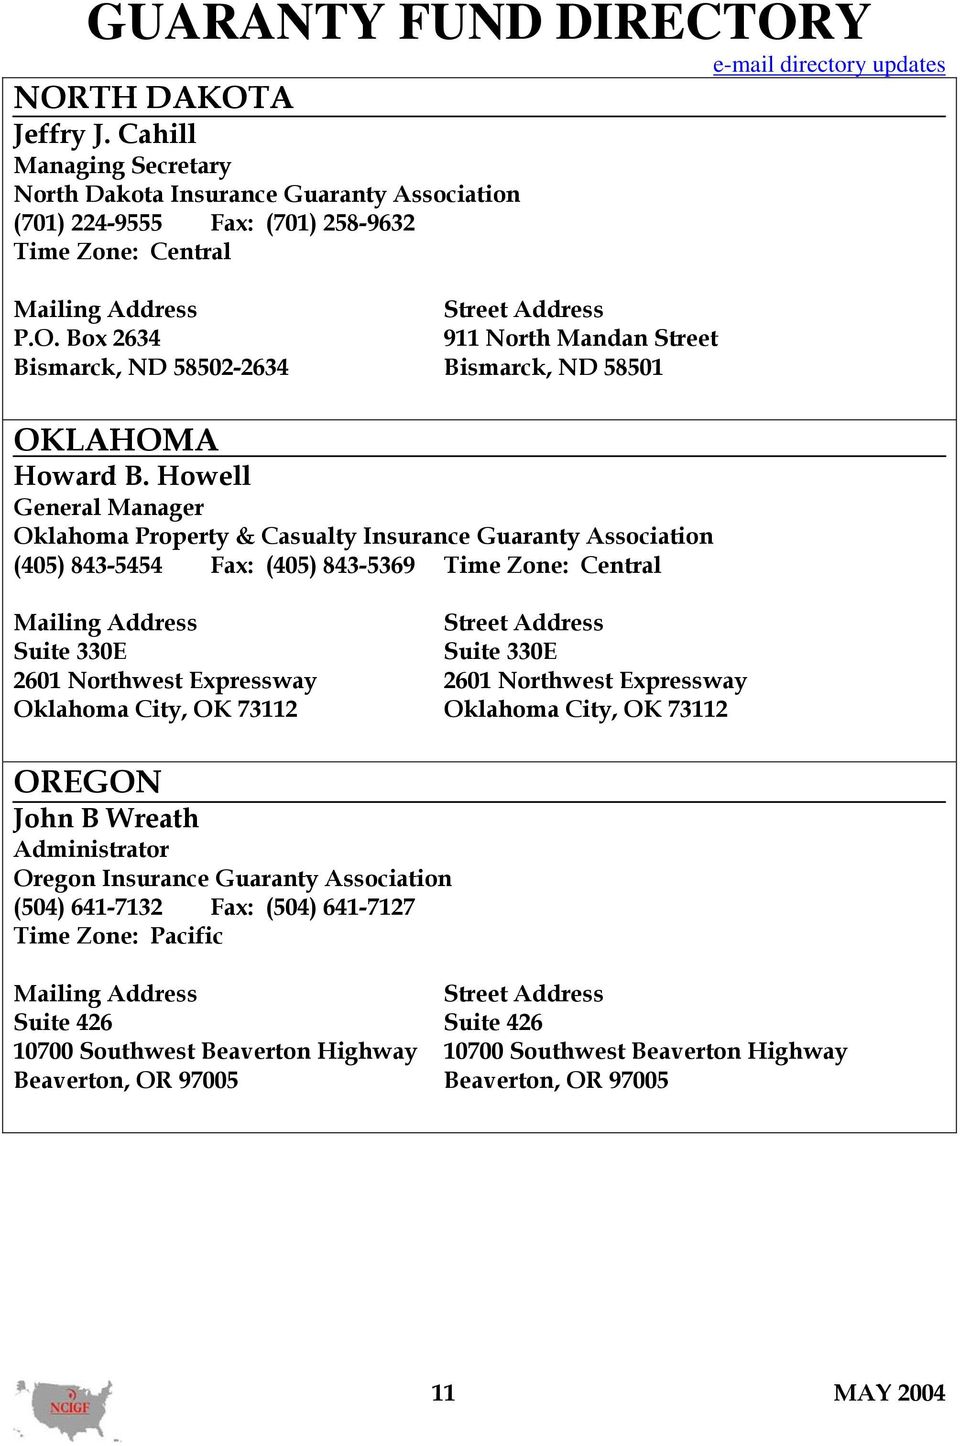 Expressway Oklahoma City, OK 73112 Oklahoma City, OK 73112 OREGON John B Wreath Administrator Oregon Insurance Guaranty Association (504) 641-7132 Fax: (504) 641-7127 Time Zone: